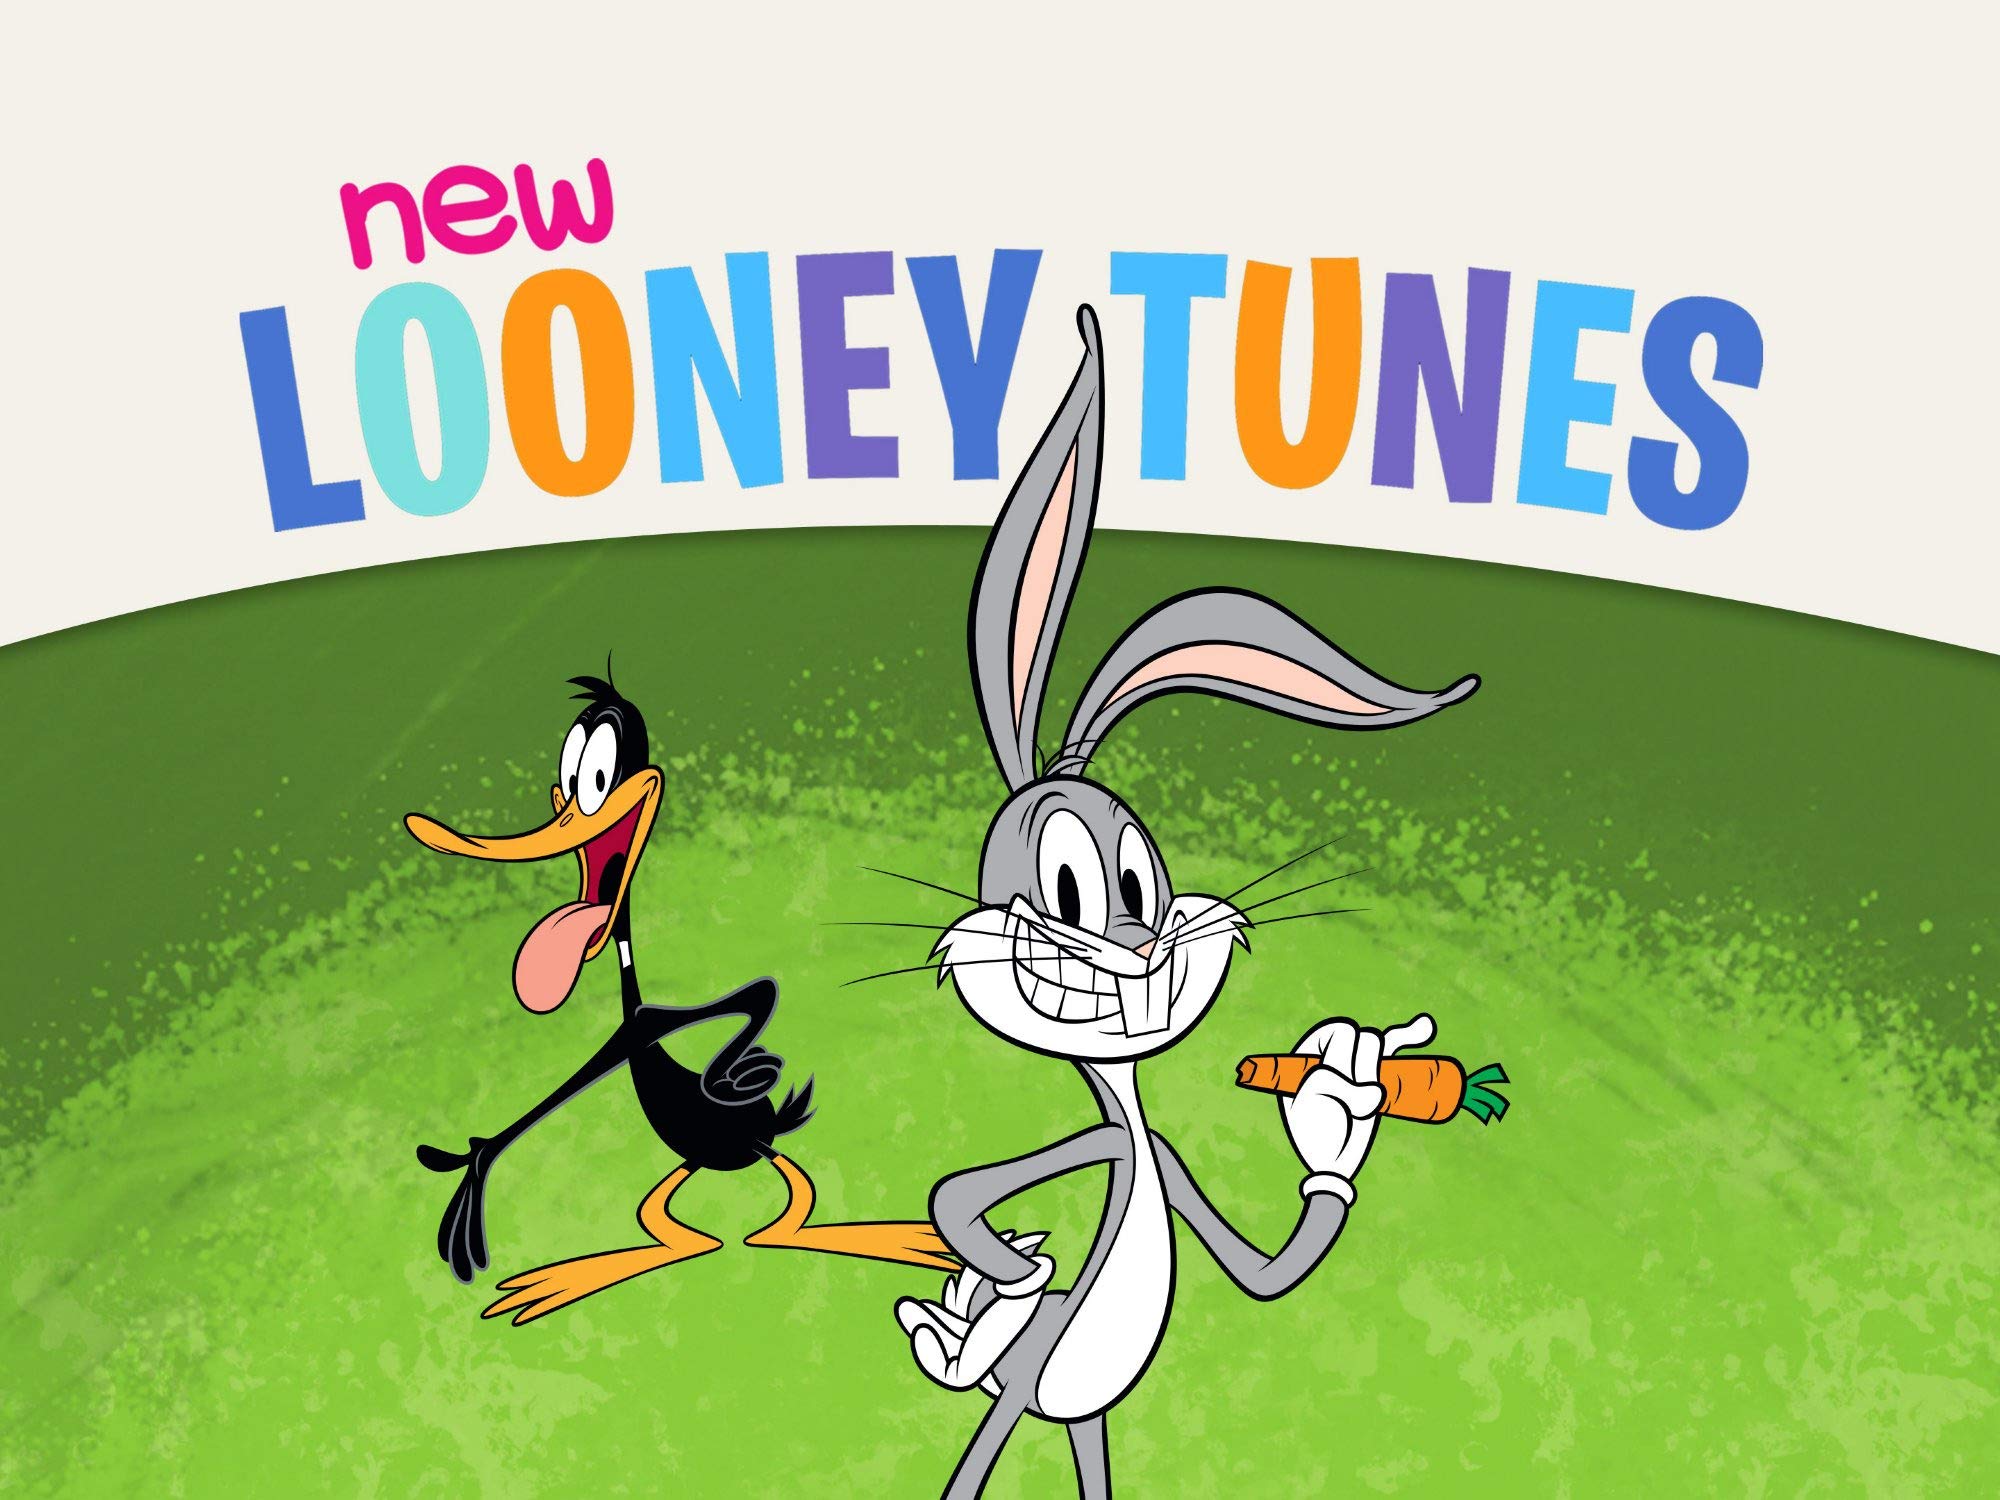 Looney Tunes Aesthetic Desktop Wallpaper Free Looney Tunes Aesthetic Desktop Background